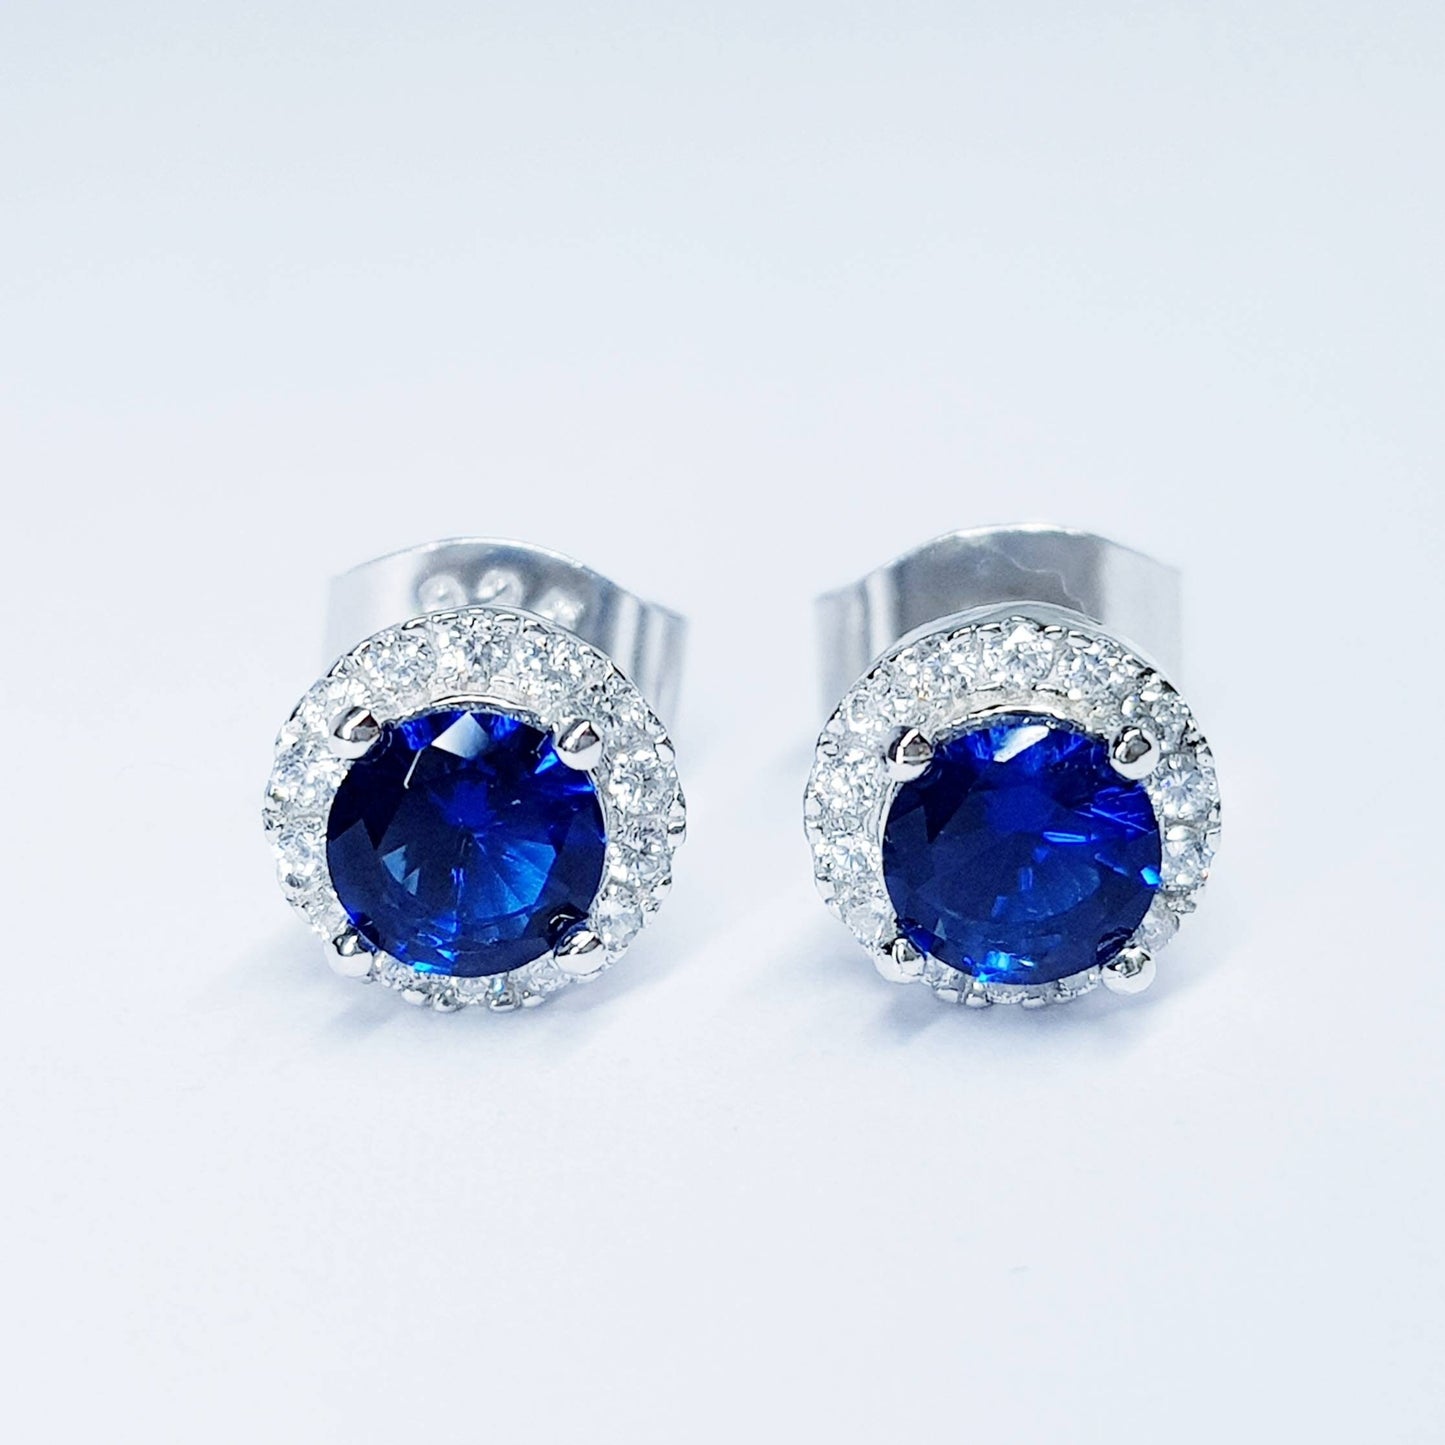 Small blue earrings, sapphire stud earrings, small stud earrings, vintage earrings, diamond halo earrings, September birthstone studs